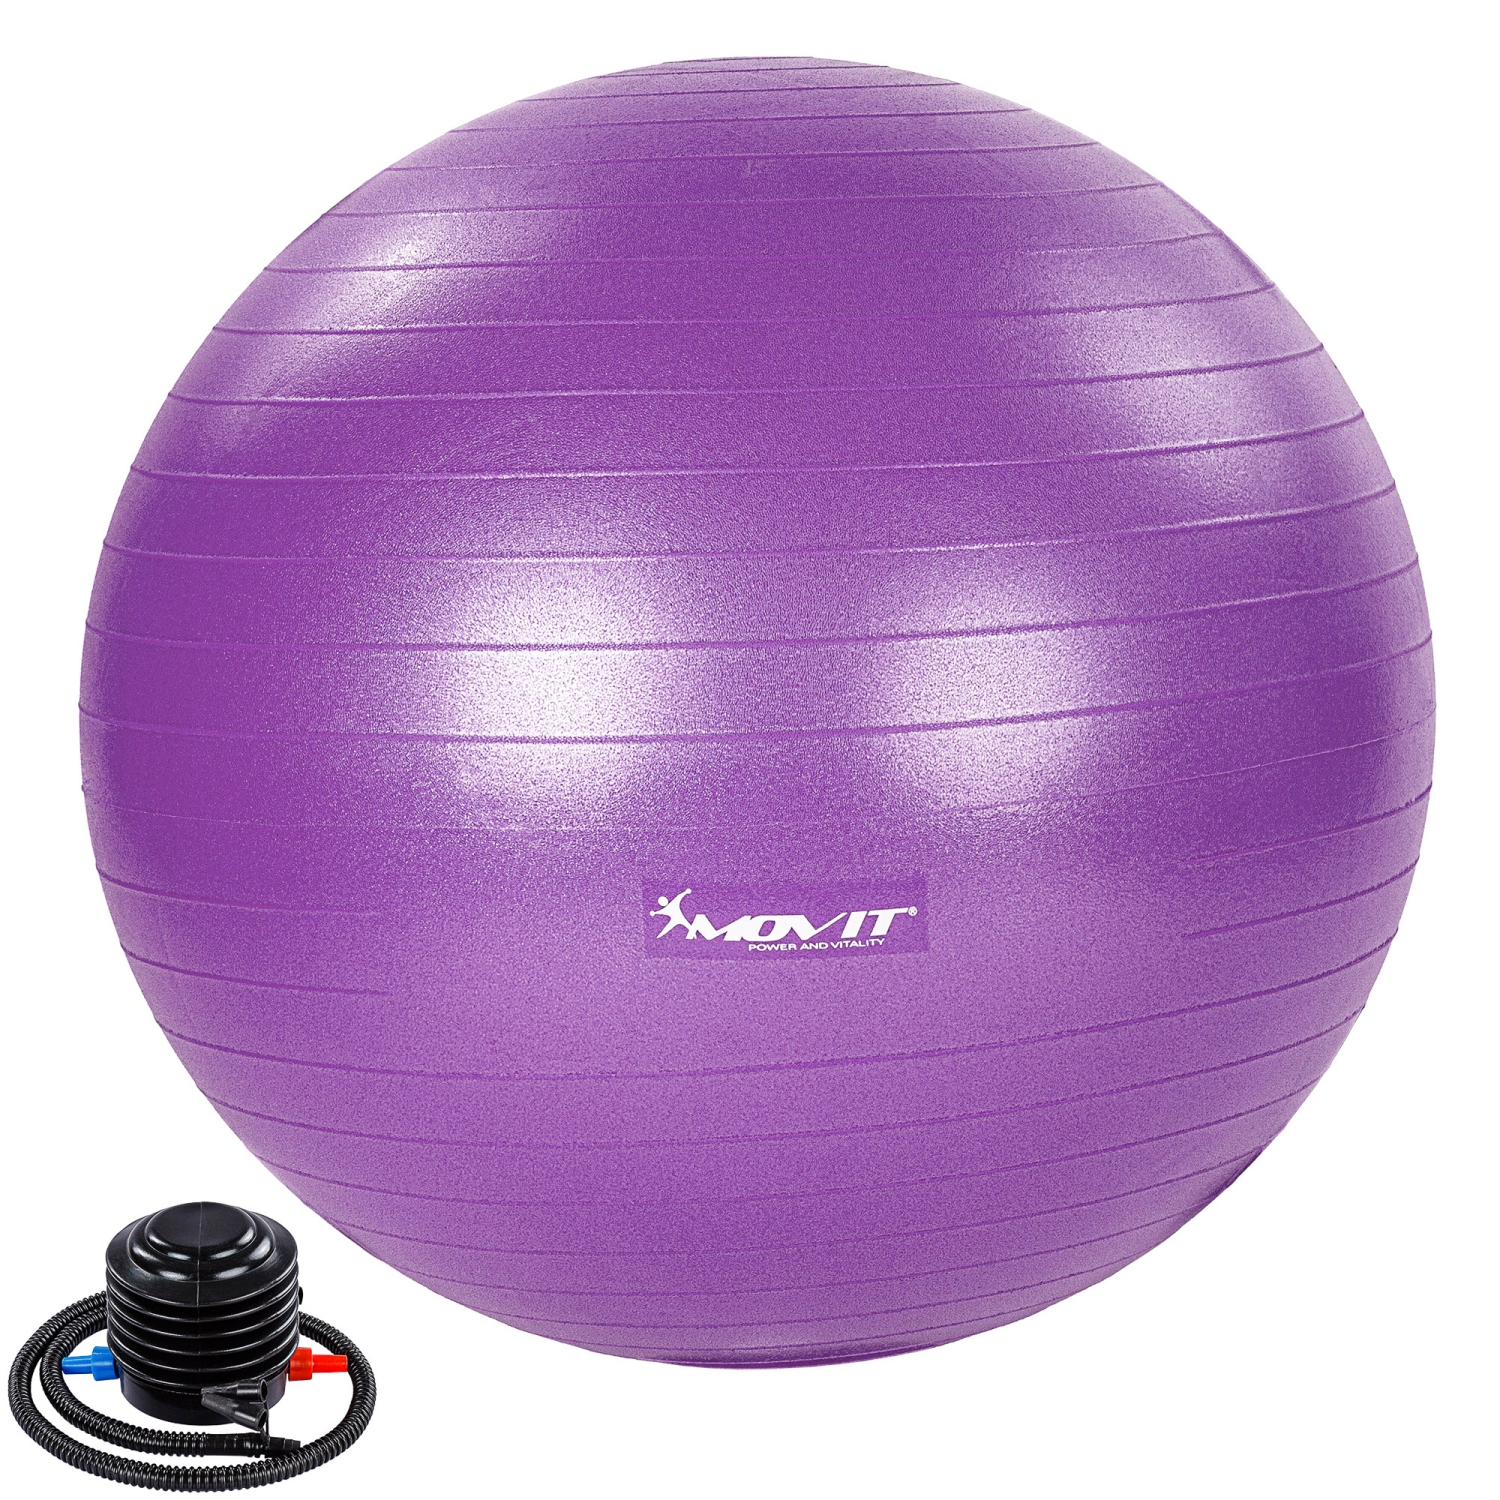 Yoga bal – Pilates bal – Fitness bal – 75 cm – Inclusief pomp – Paars